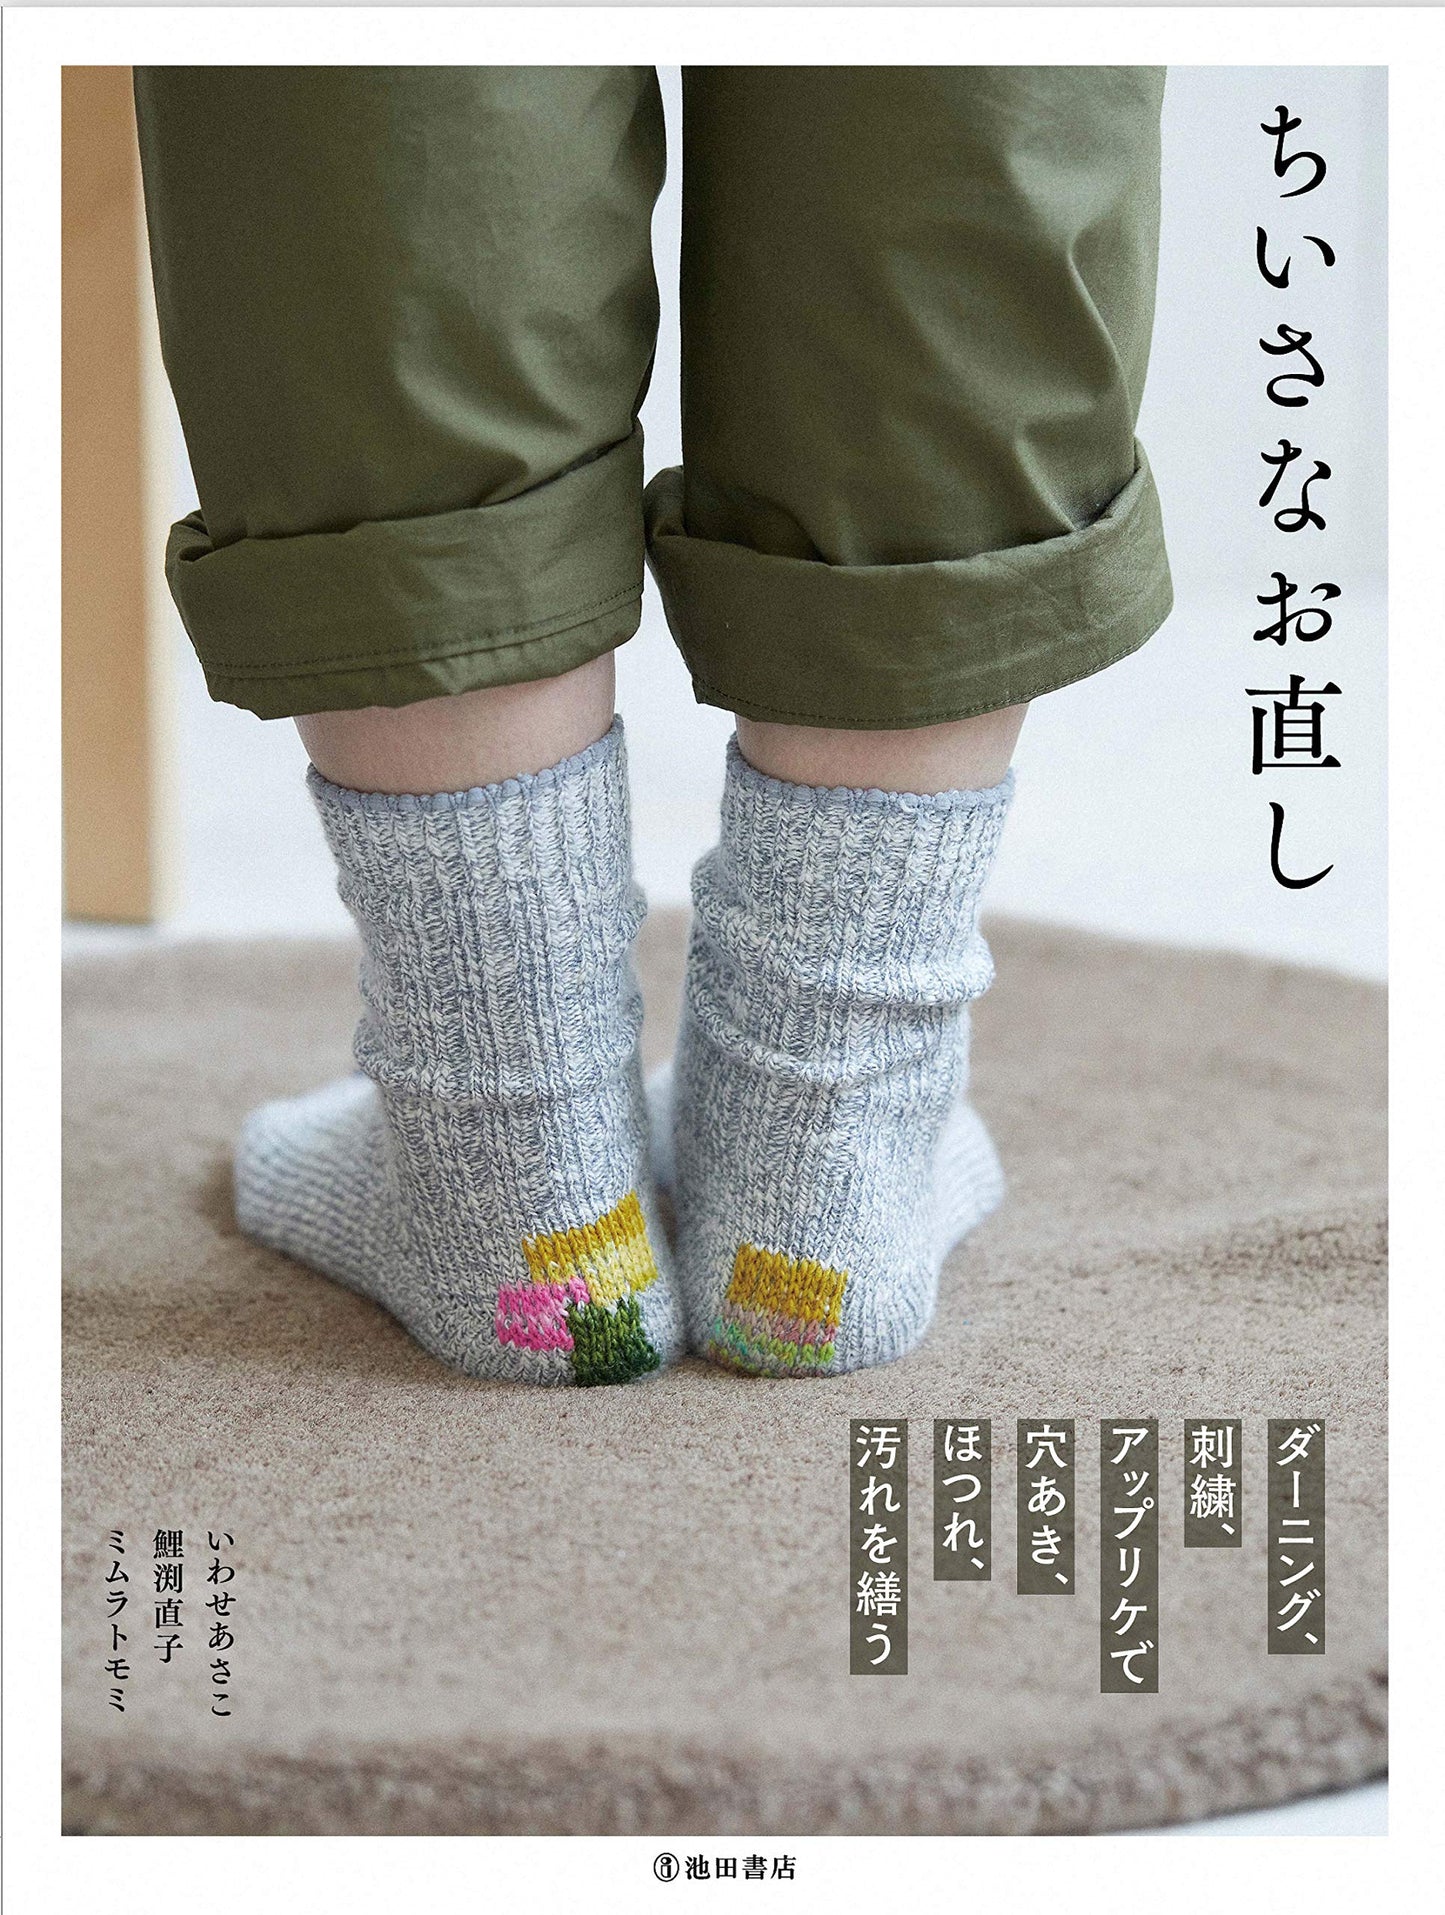 Darning stitch by by Asako Ise, Naoko Koibuchi, Tomomi Mimura